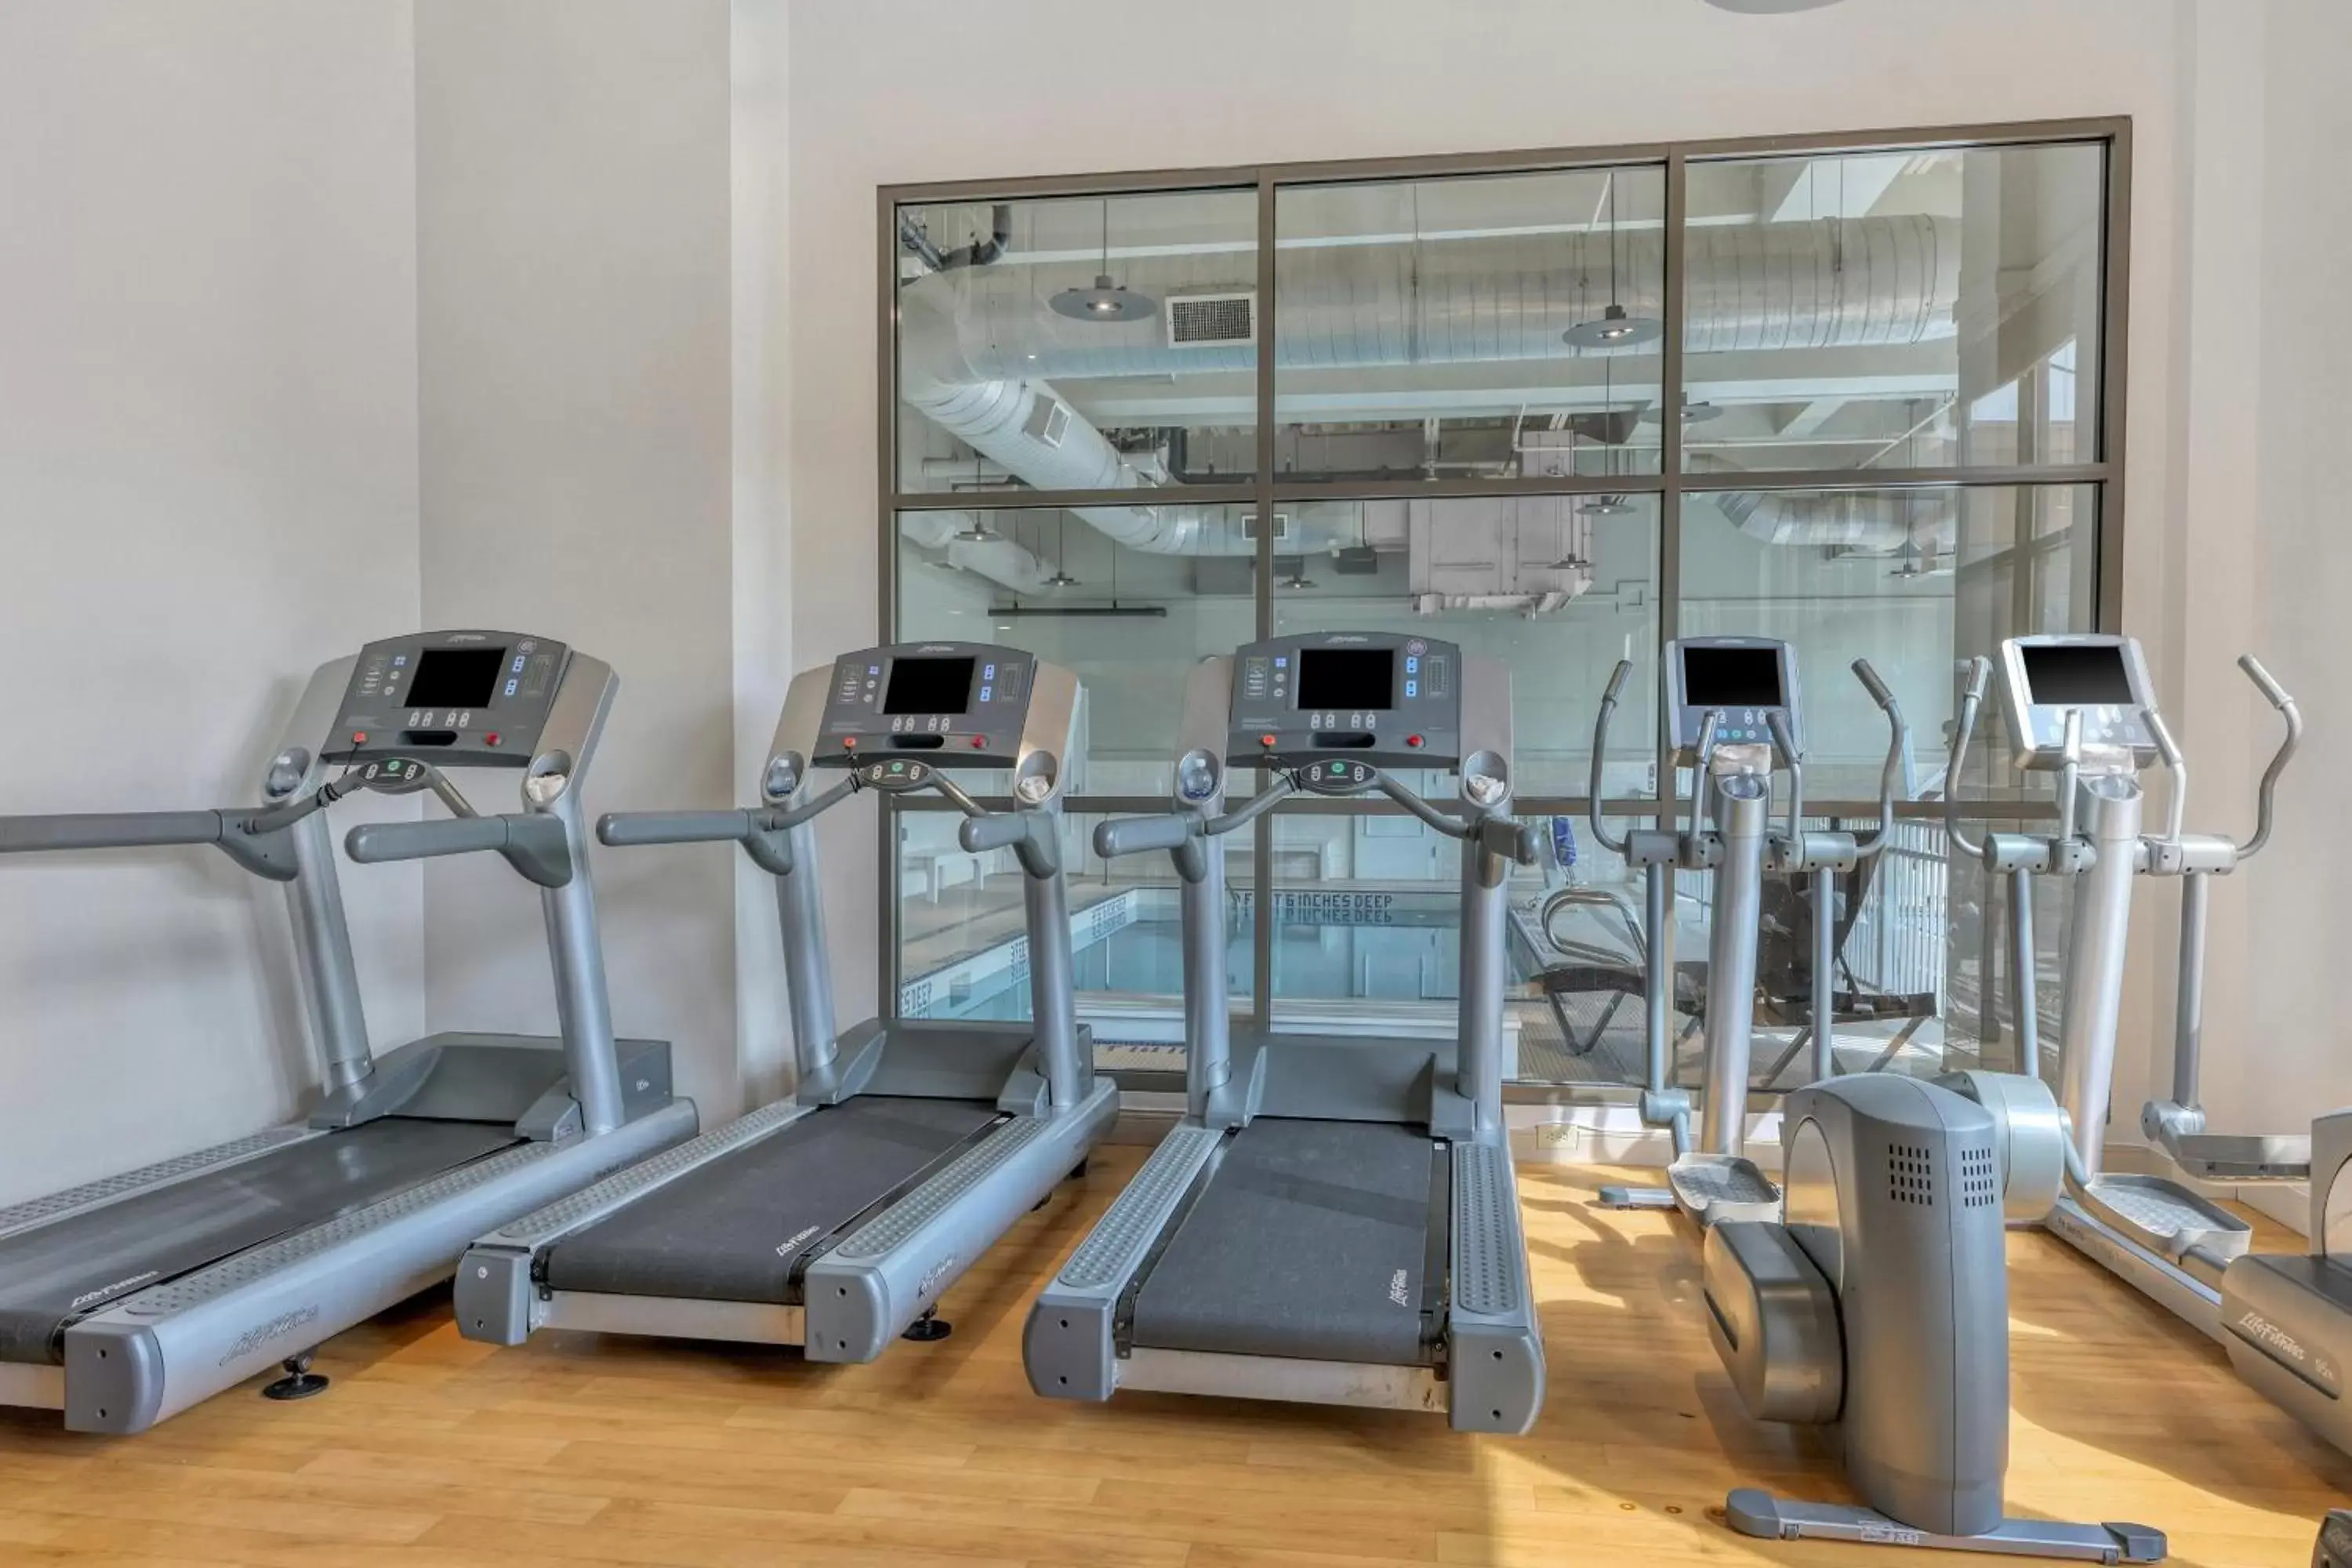 Fitness centre/facilities, Fitness Center/Facilities in Sheraton Tarrytown Hotel